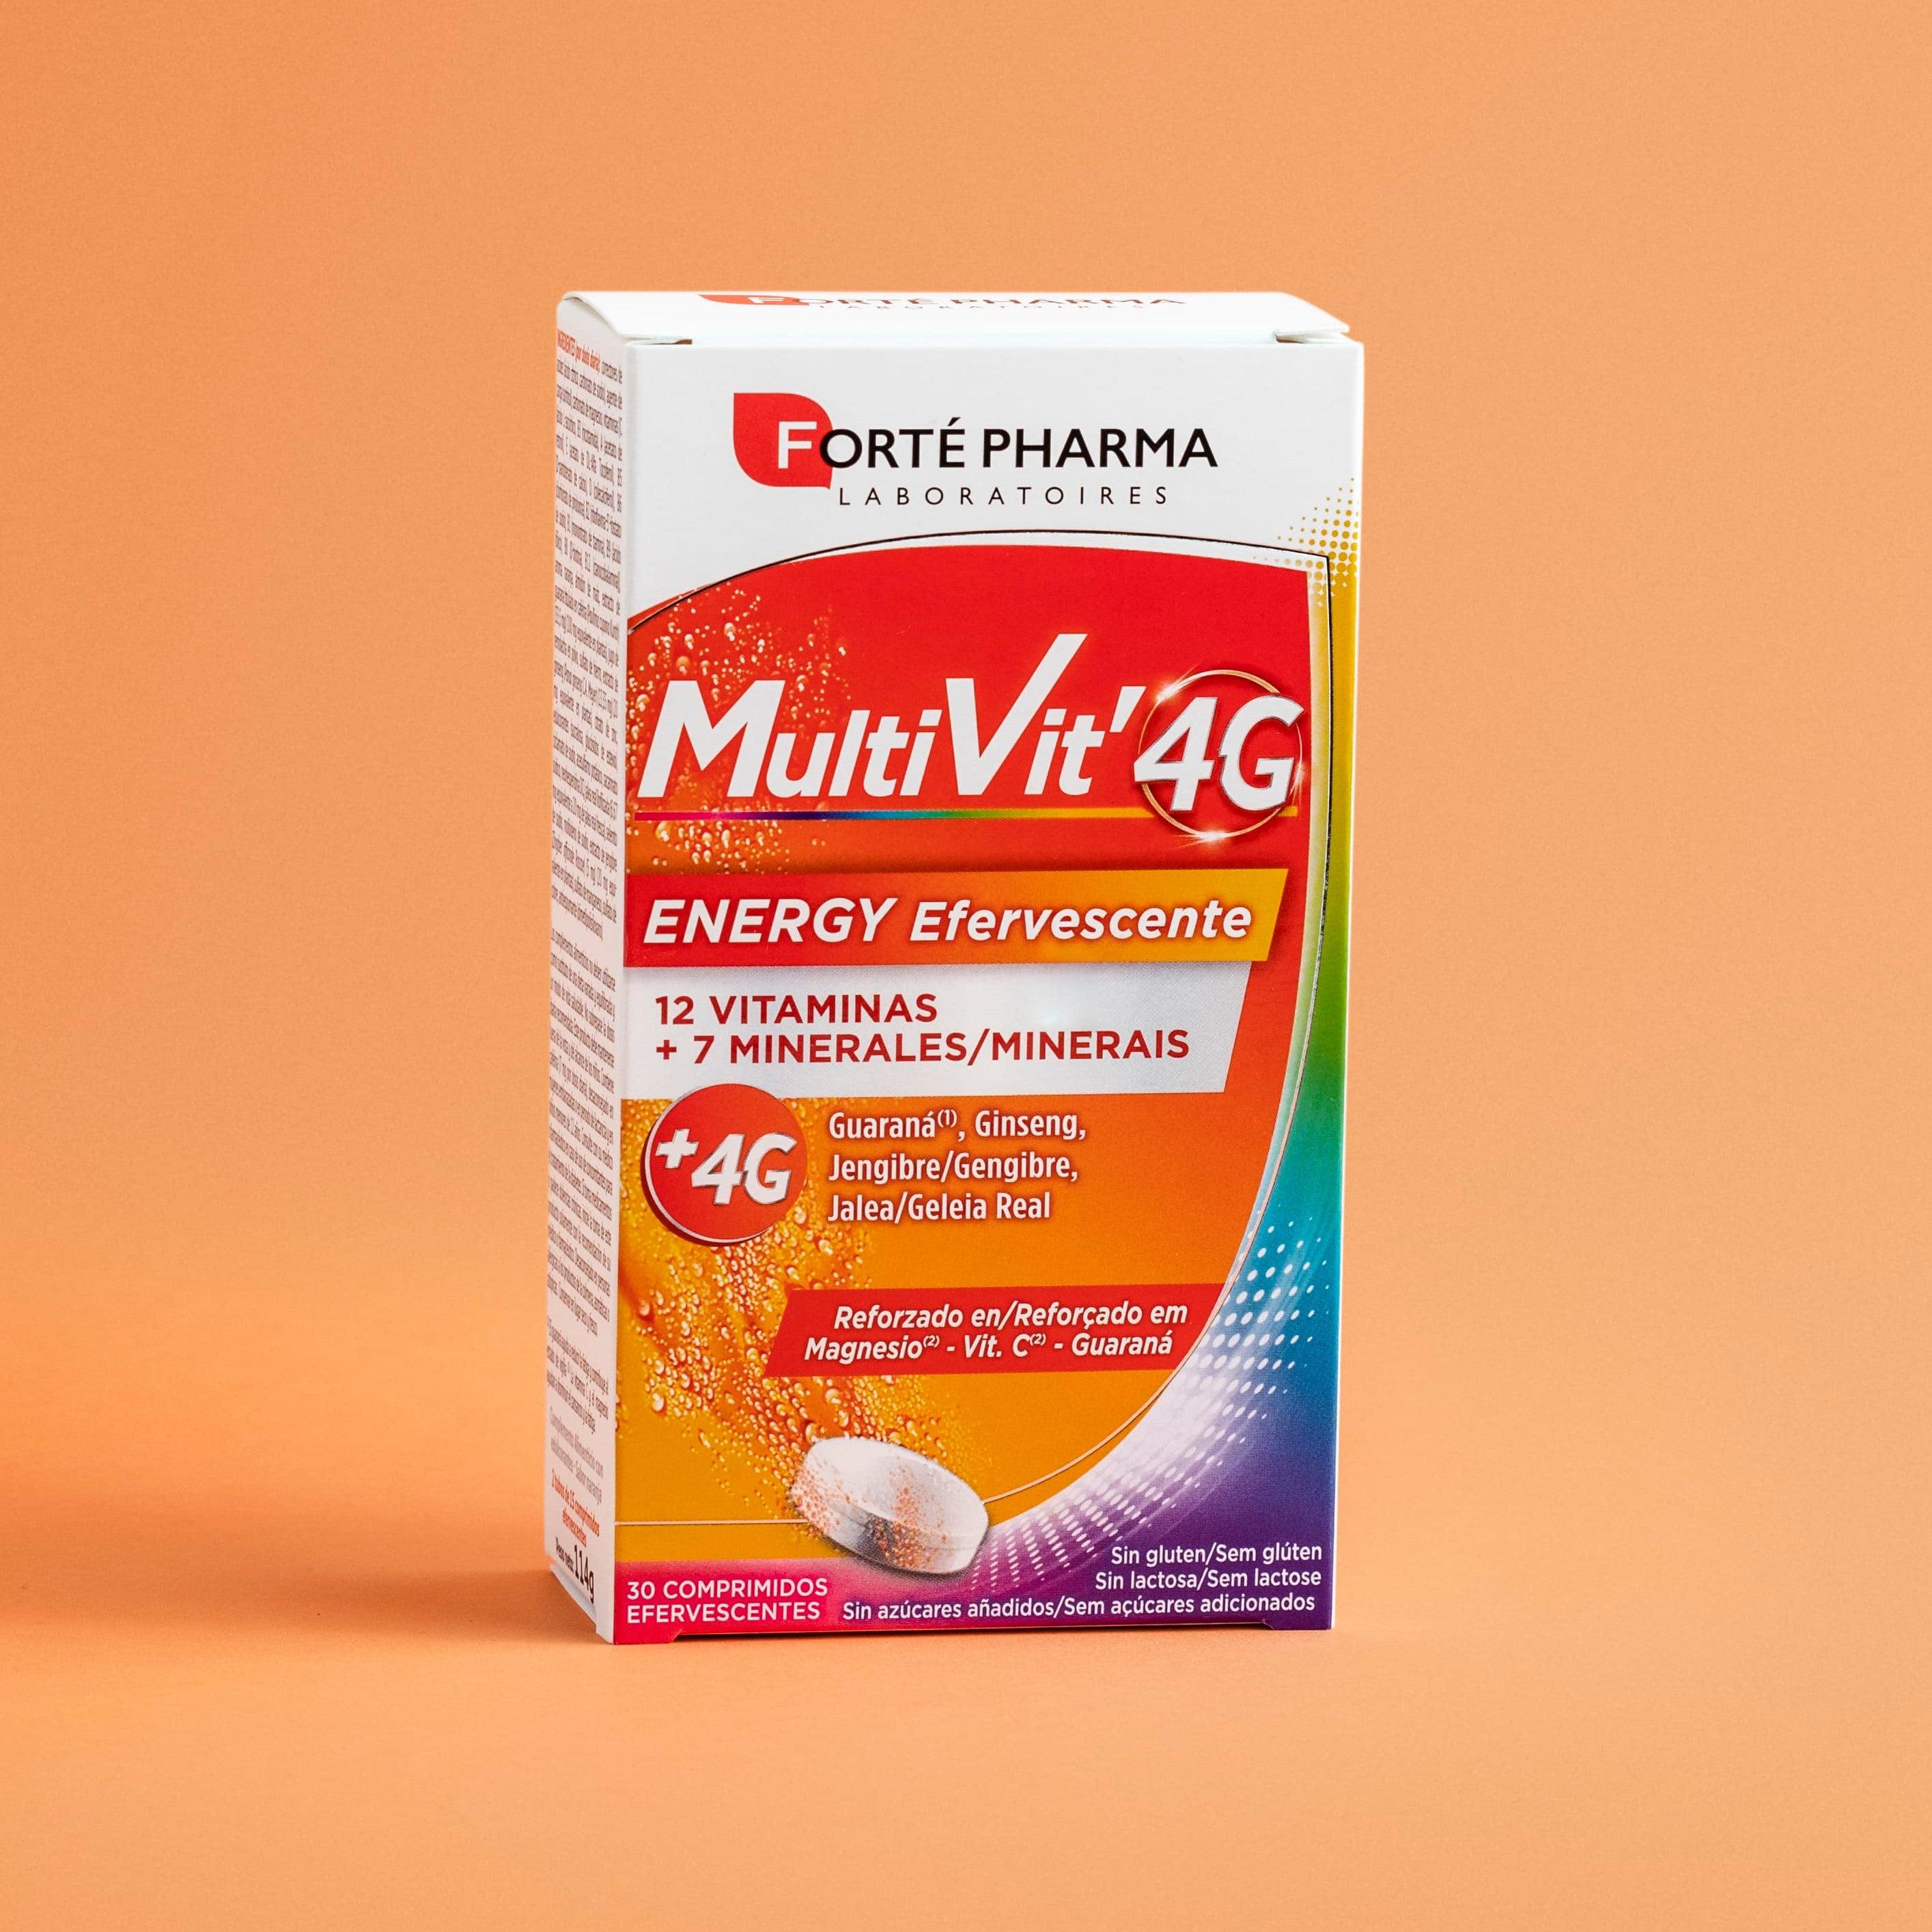 multivit 4g energy efervescente-Forté Pharma